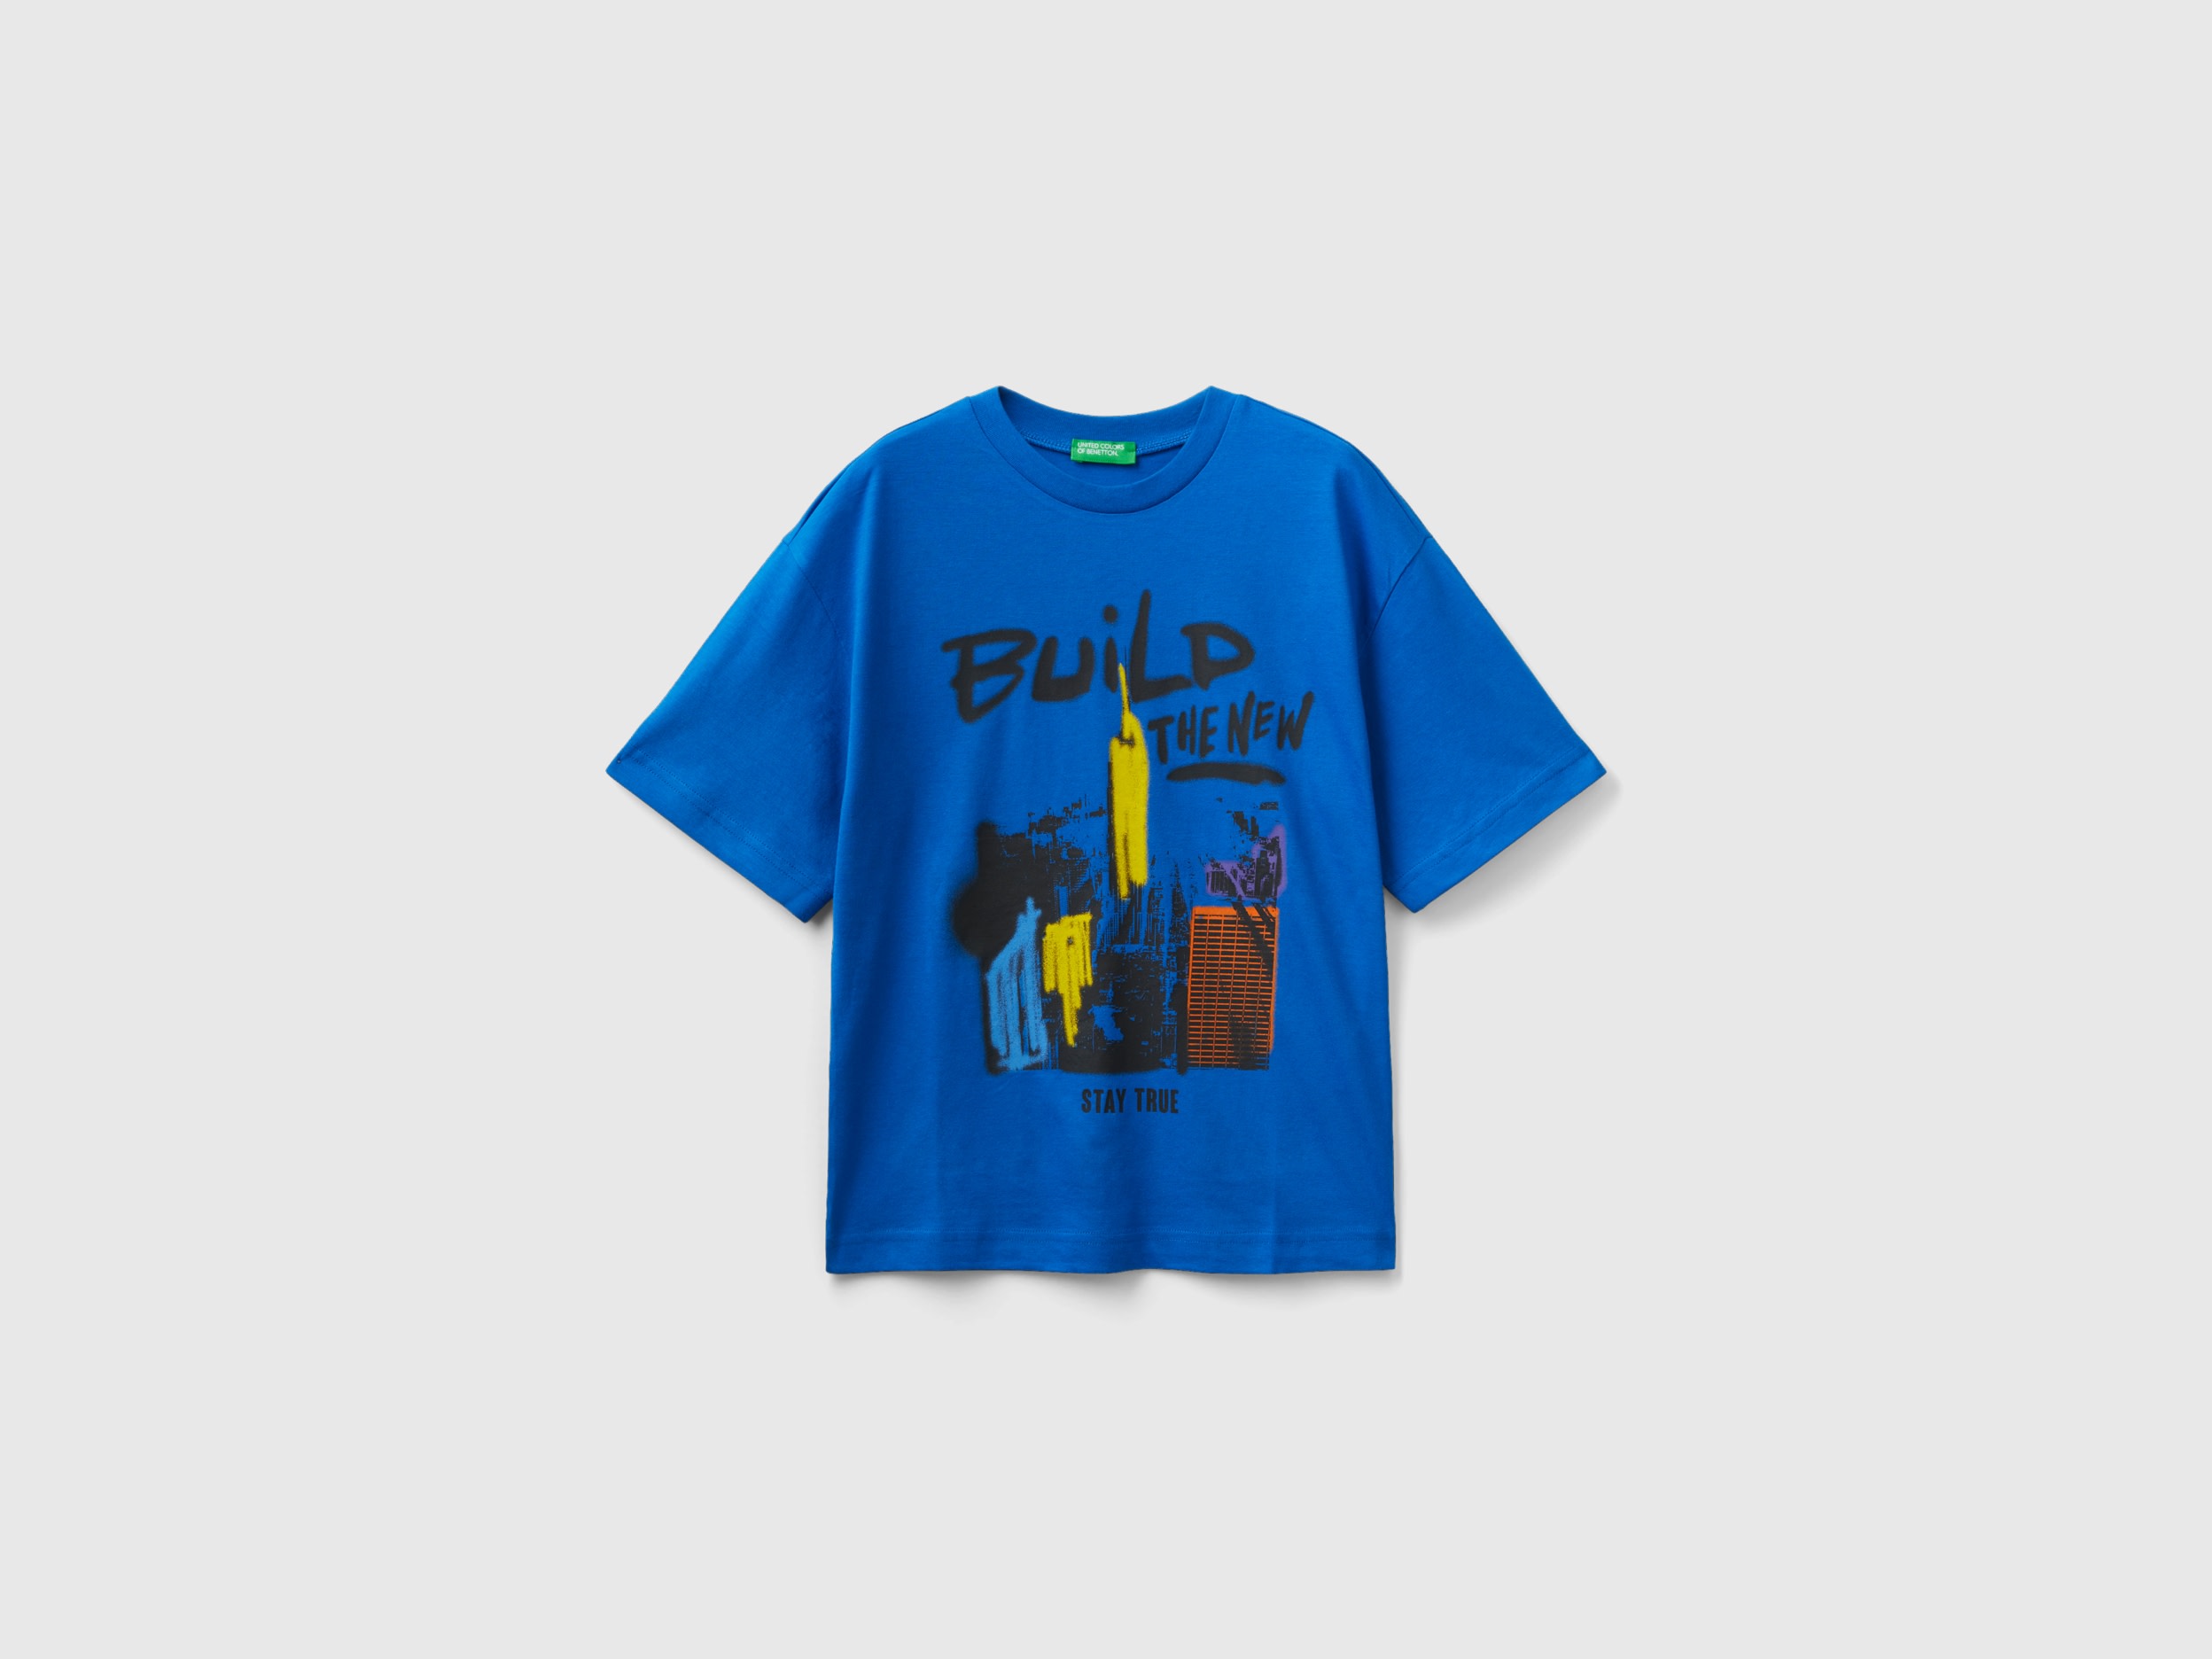 Benetton, Crew Neck T-shirt With Print, size 3XL, Bright Blue, Kids